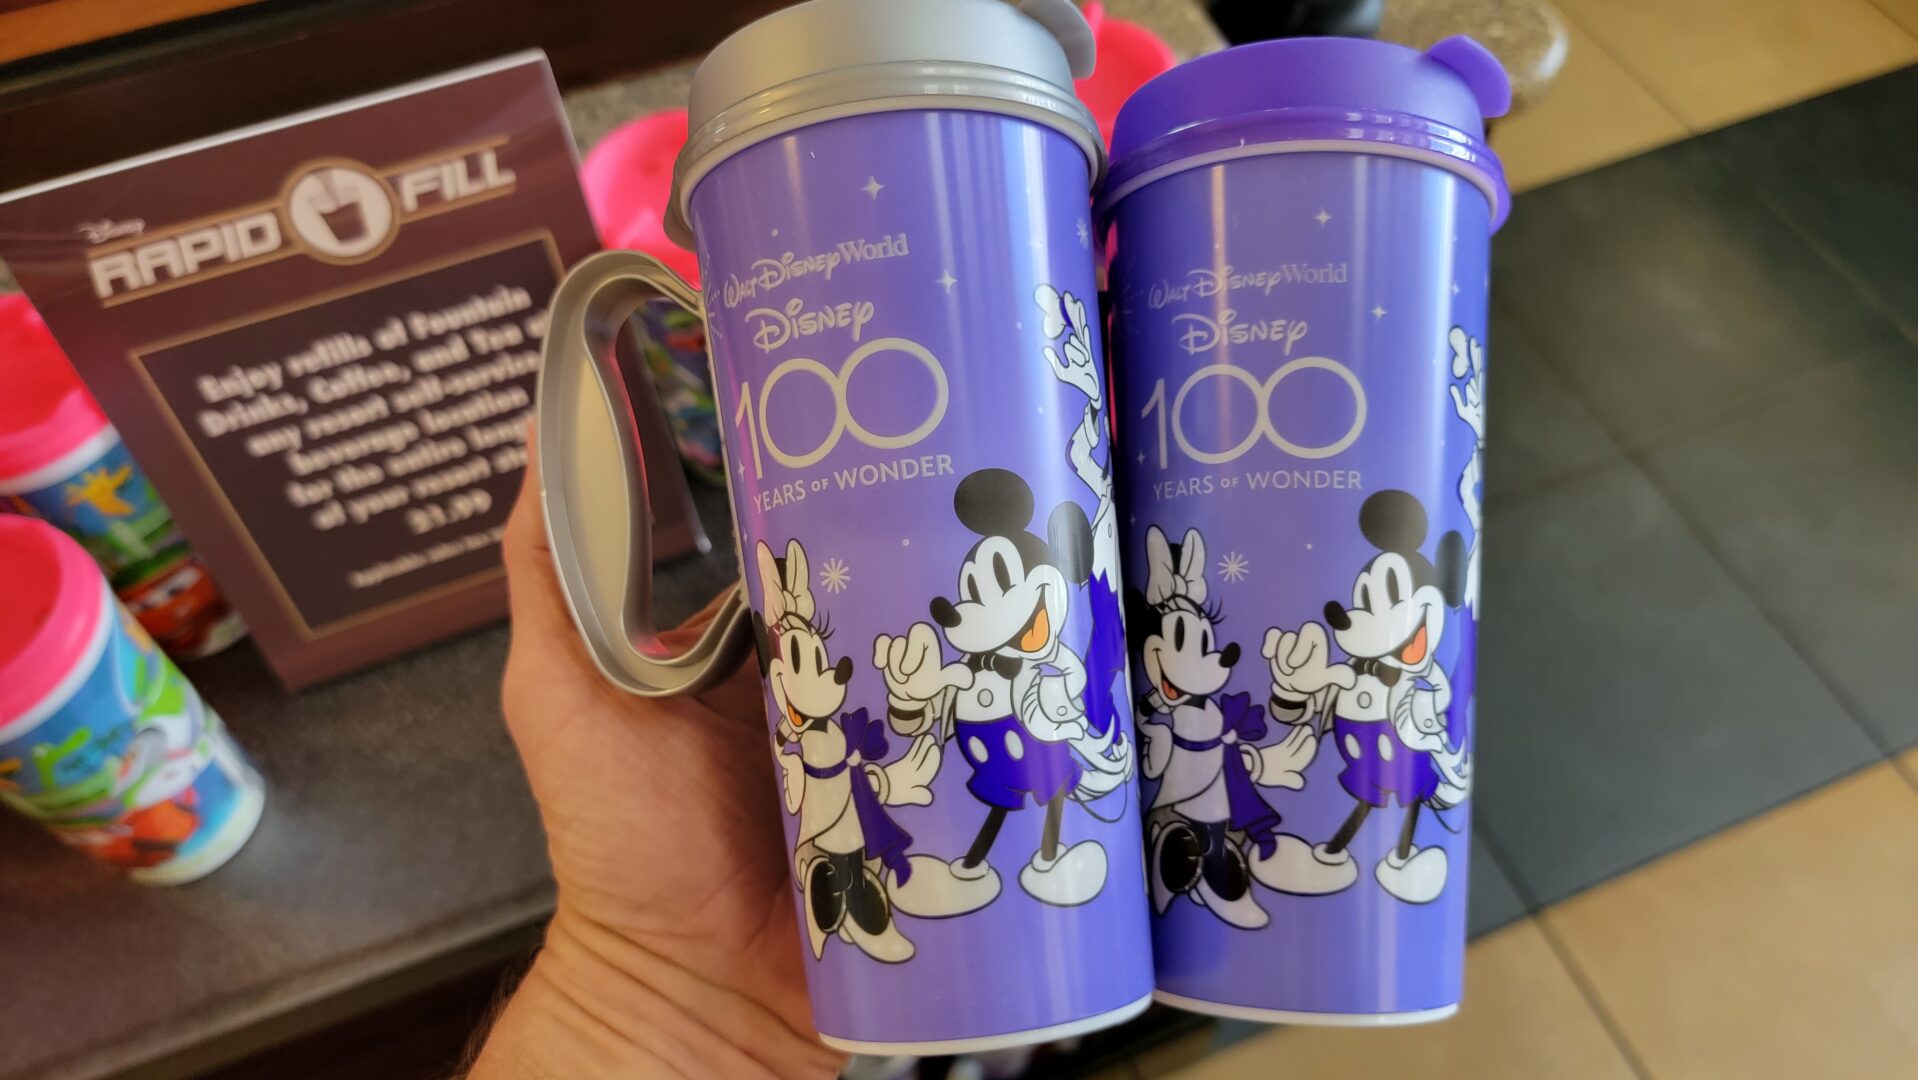 New Disney100 Refillable Mugs Now at Disney World